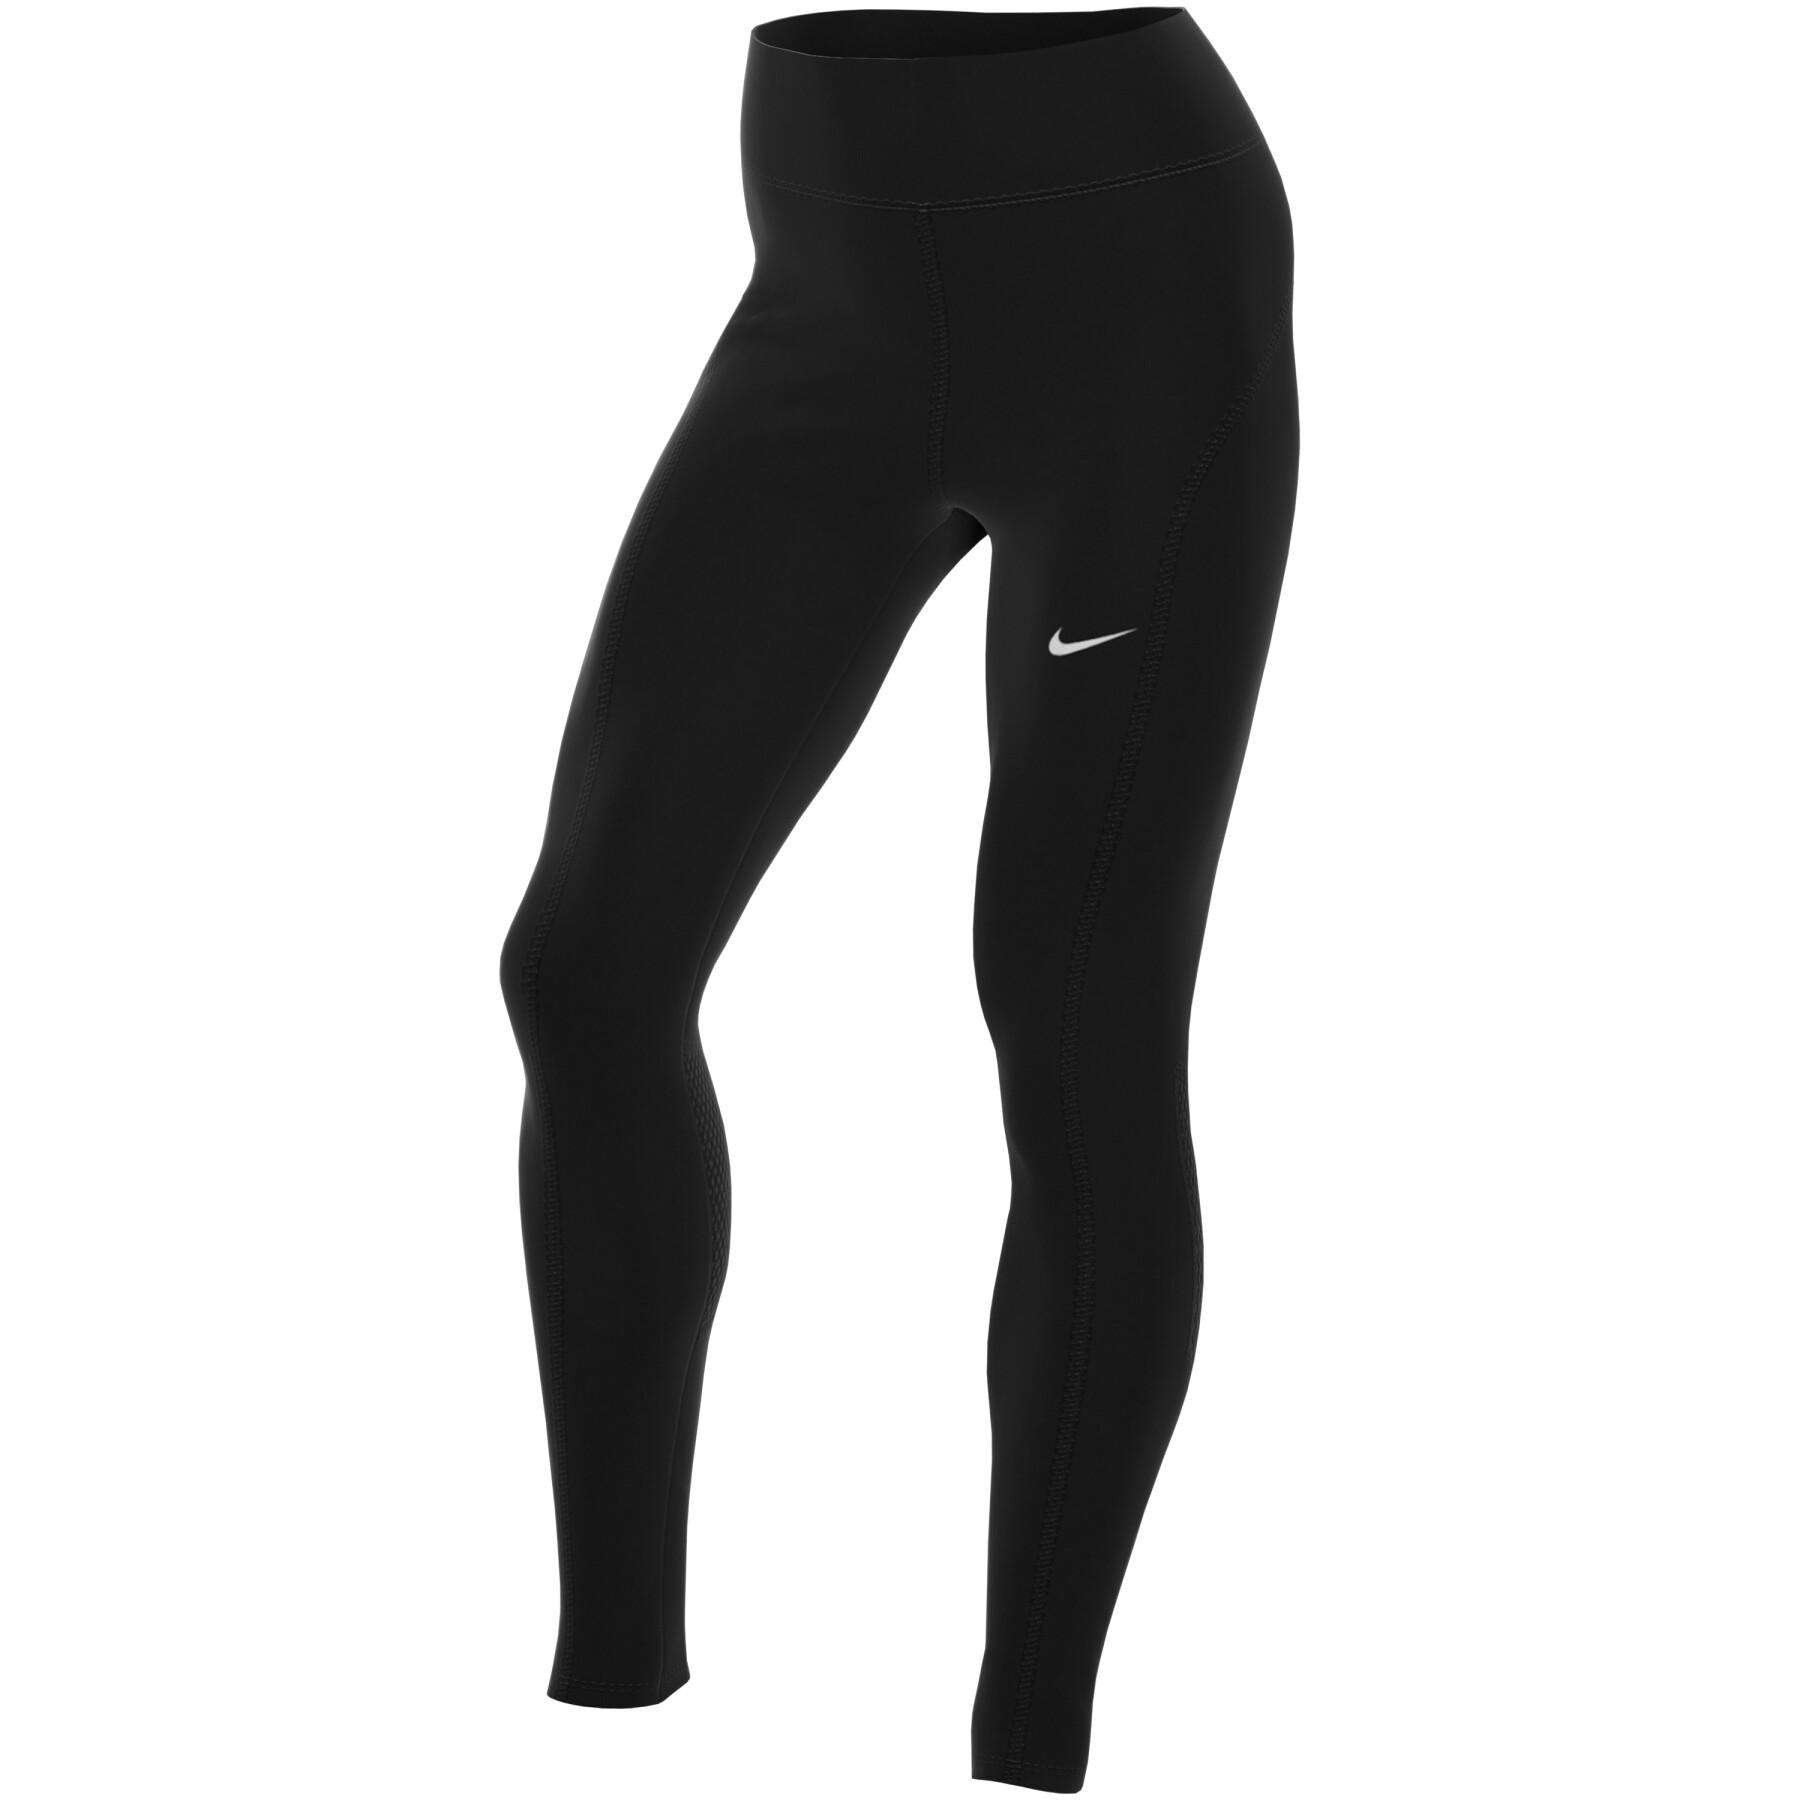 Women's trousers Nike Epic Fast - Nike - Shoes running woman - Physical  maintenance